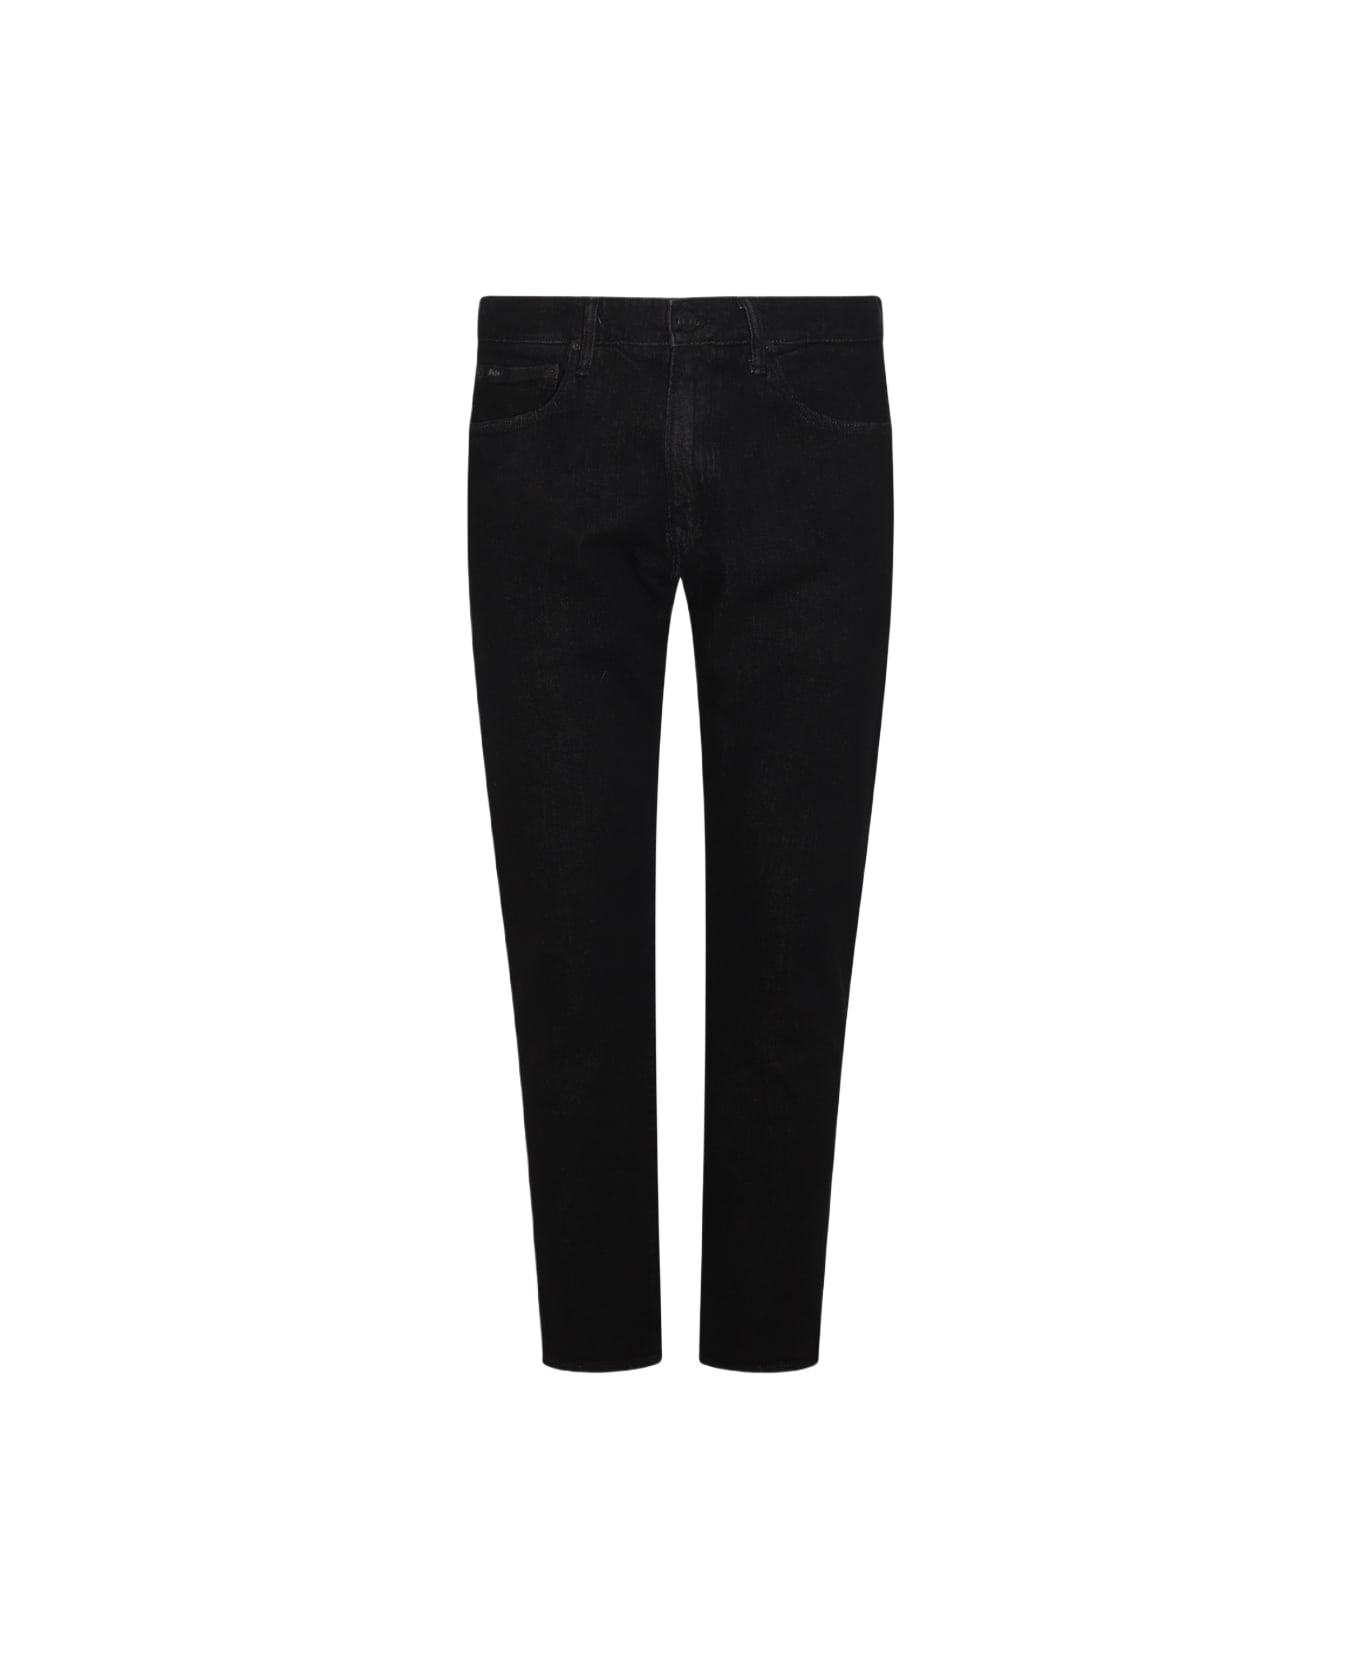 Polo Ralph Lauren Black Cotton Denim Jeans - HARRIS V2